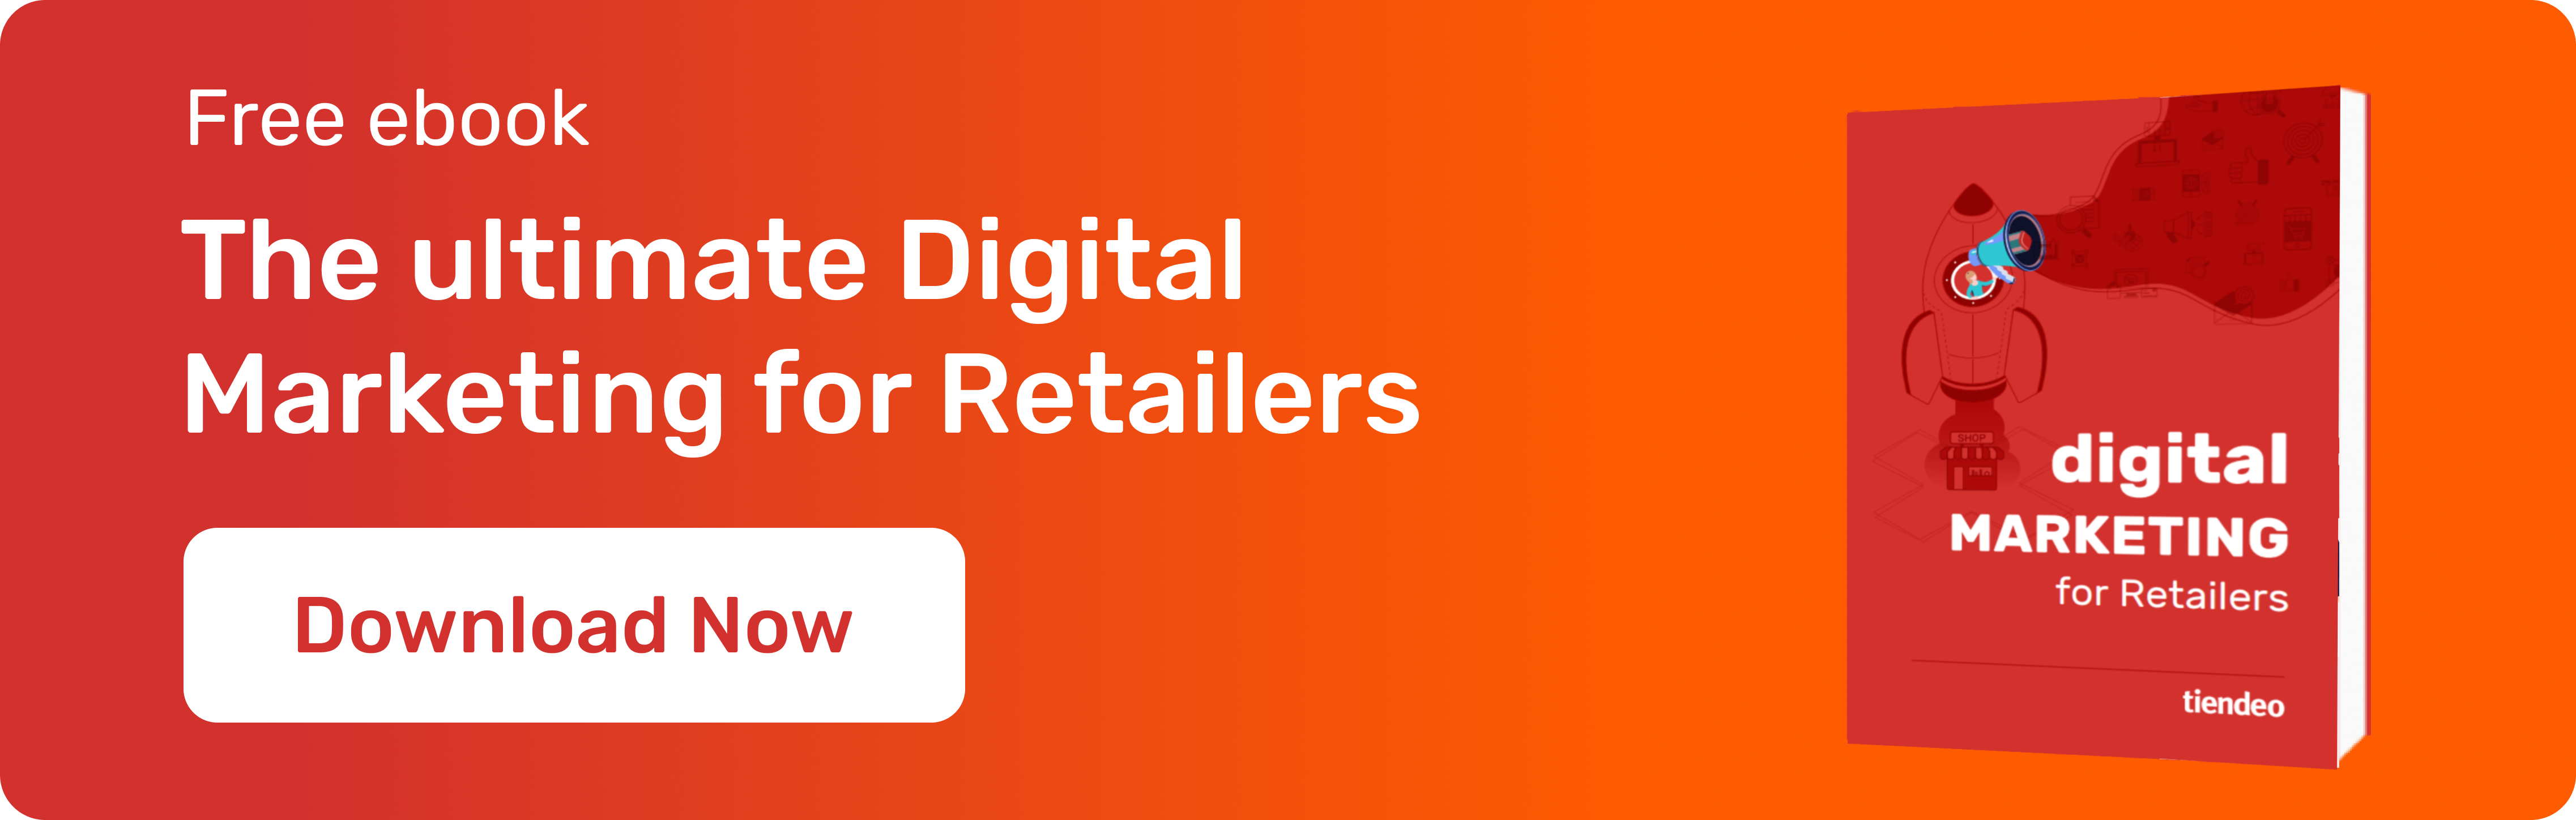 Digital Marketing for Retailers